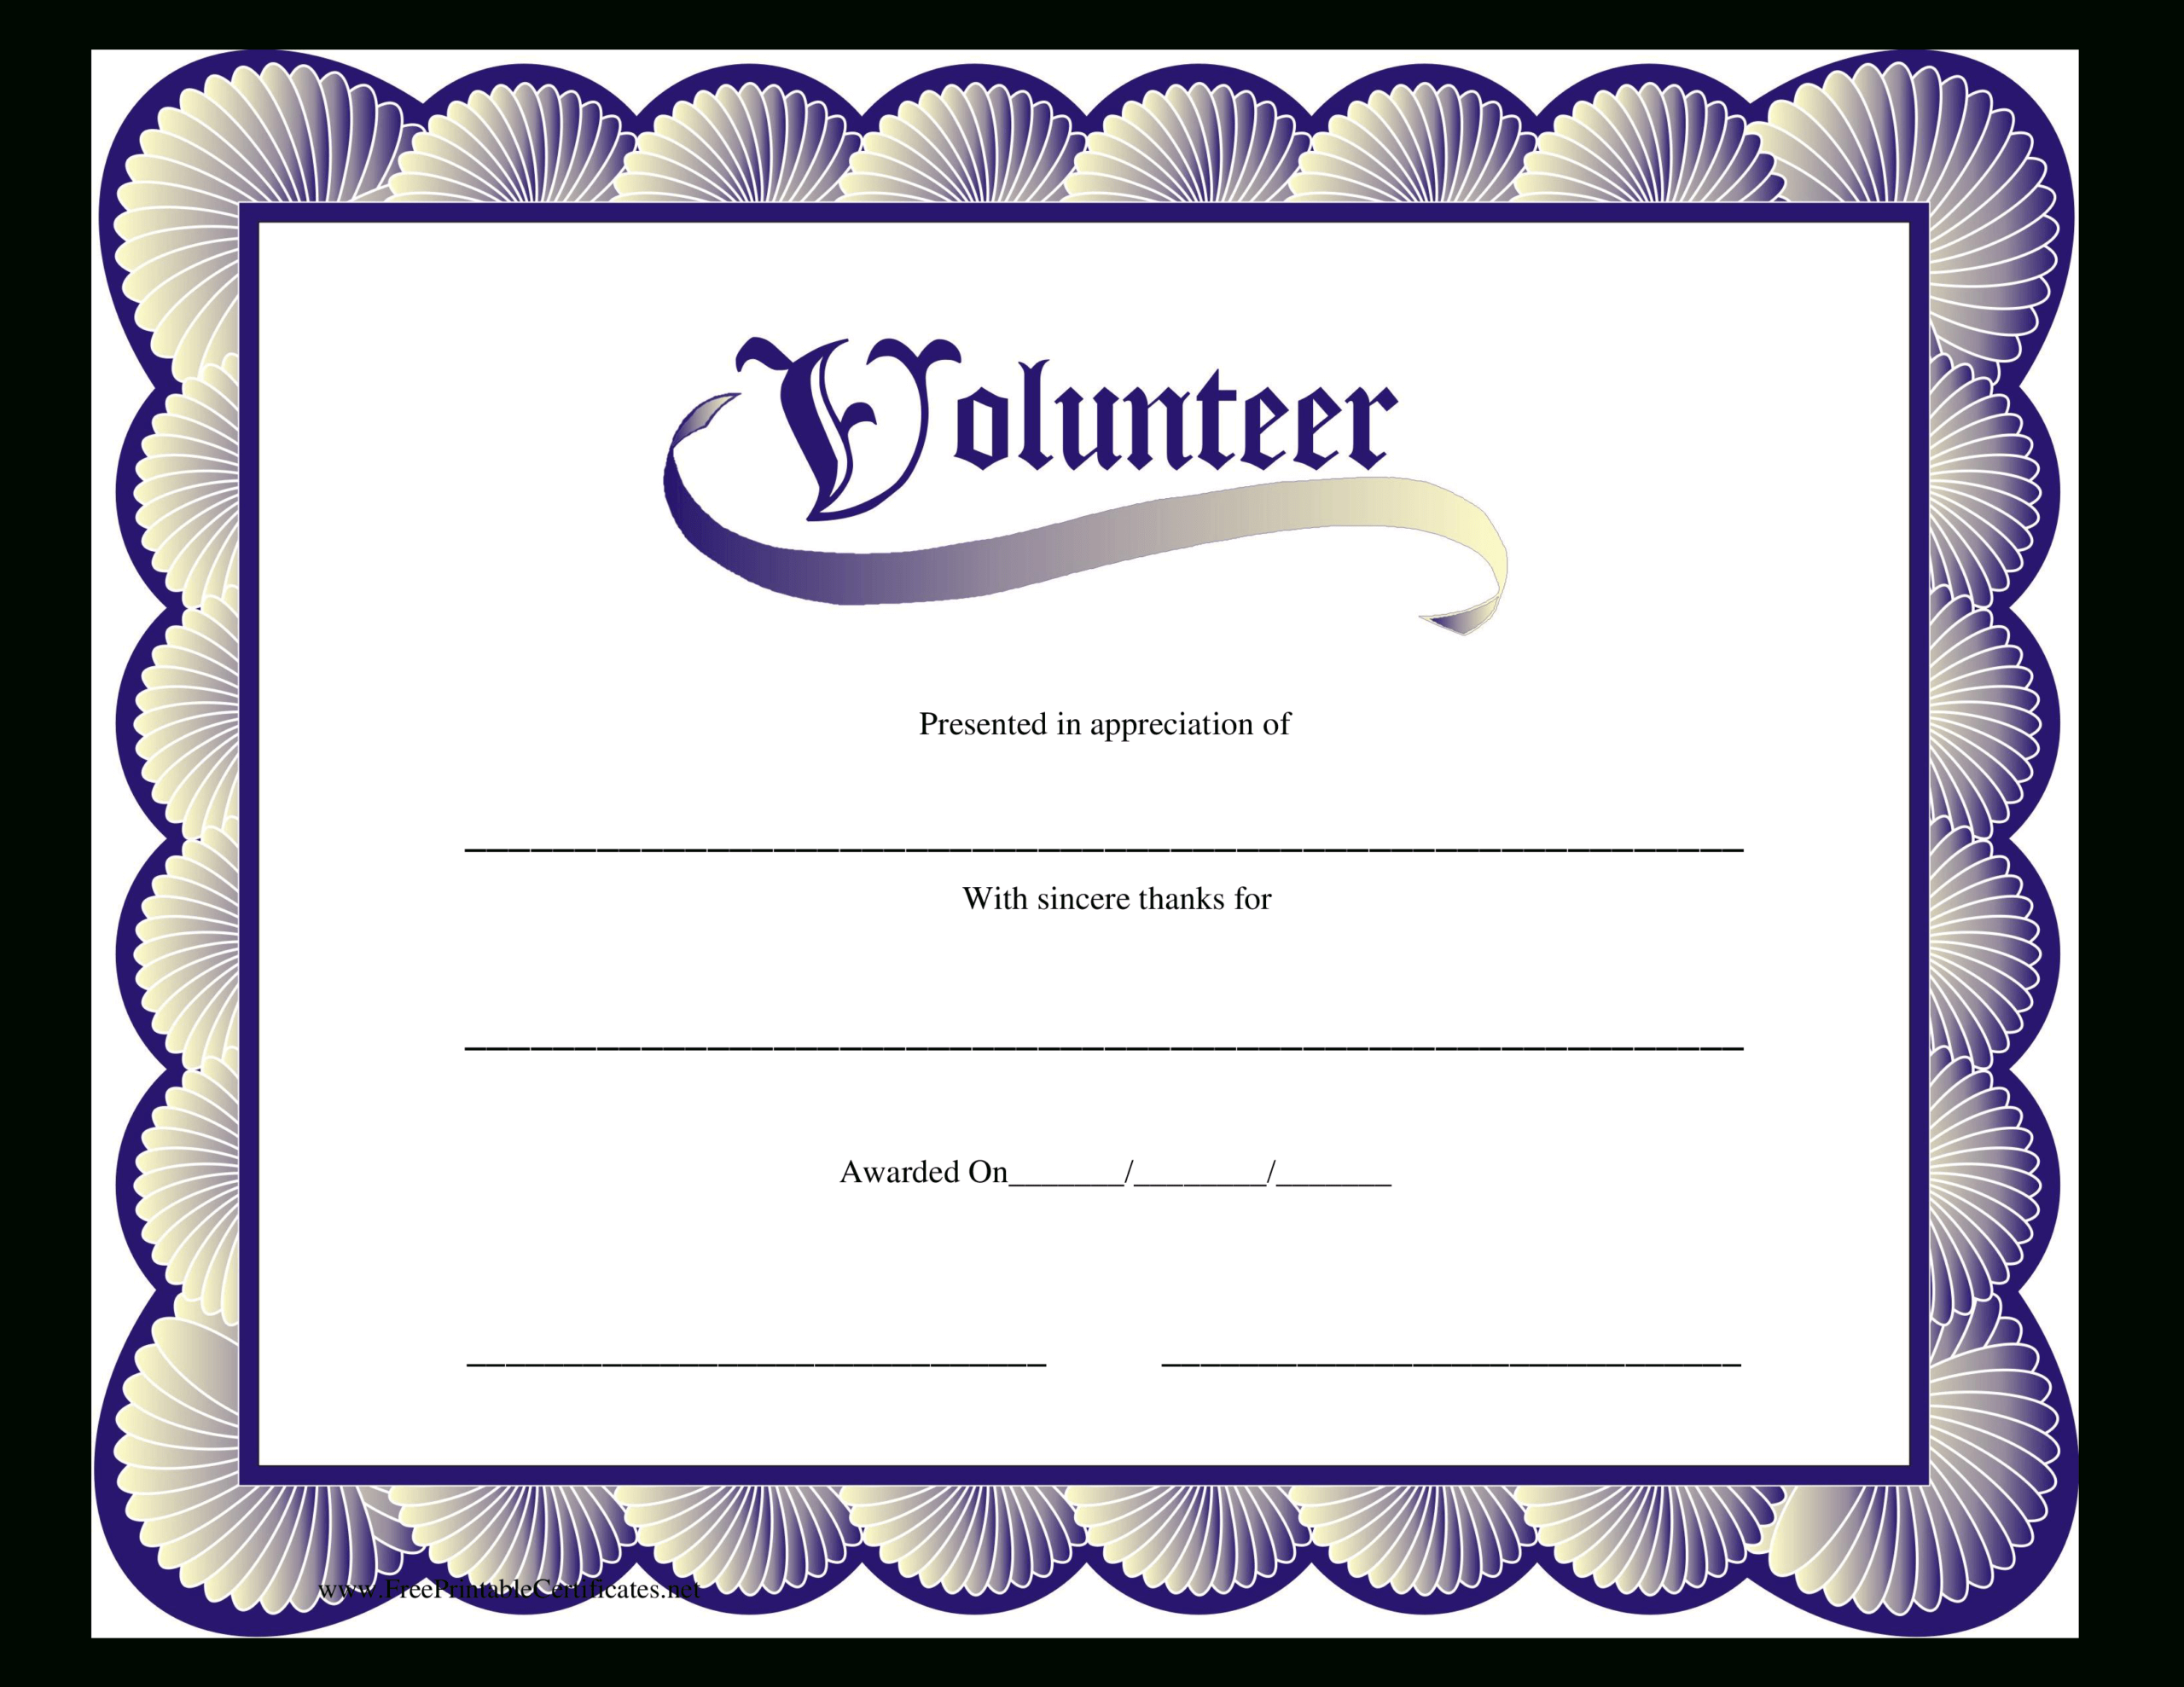 Volunteer Certificate | Templates At Allbusinesstemplates Throughout Volunteer Certificate Template